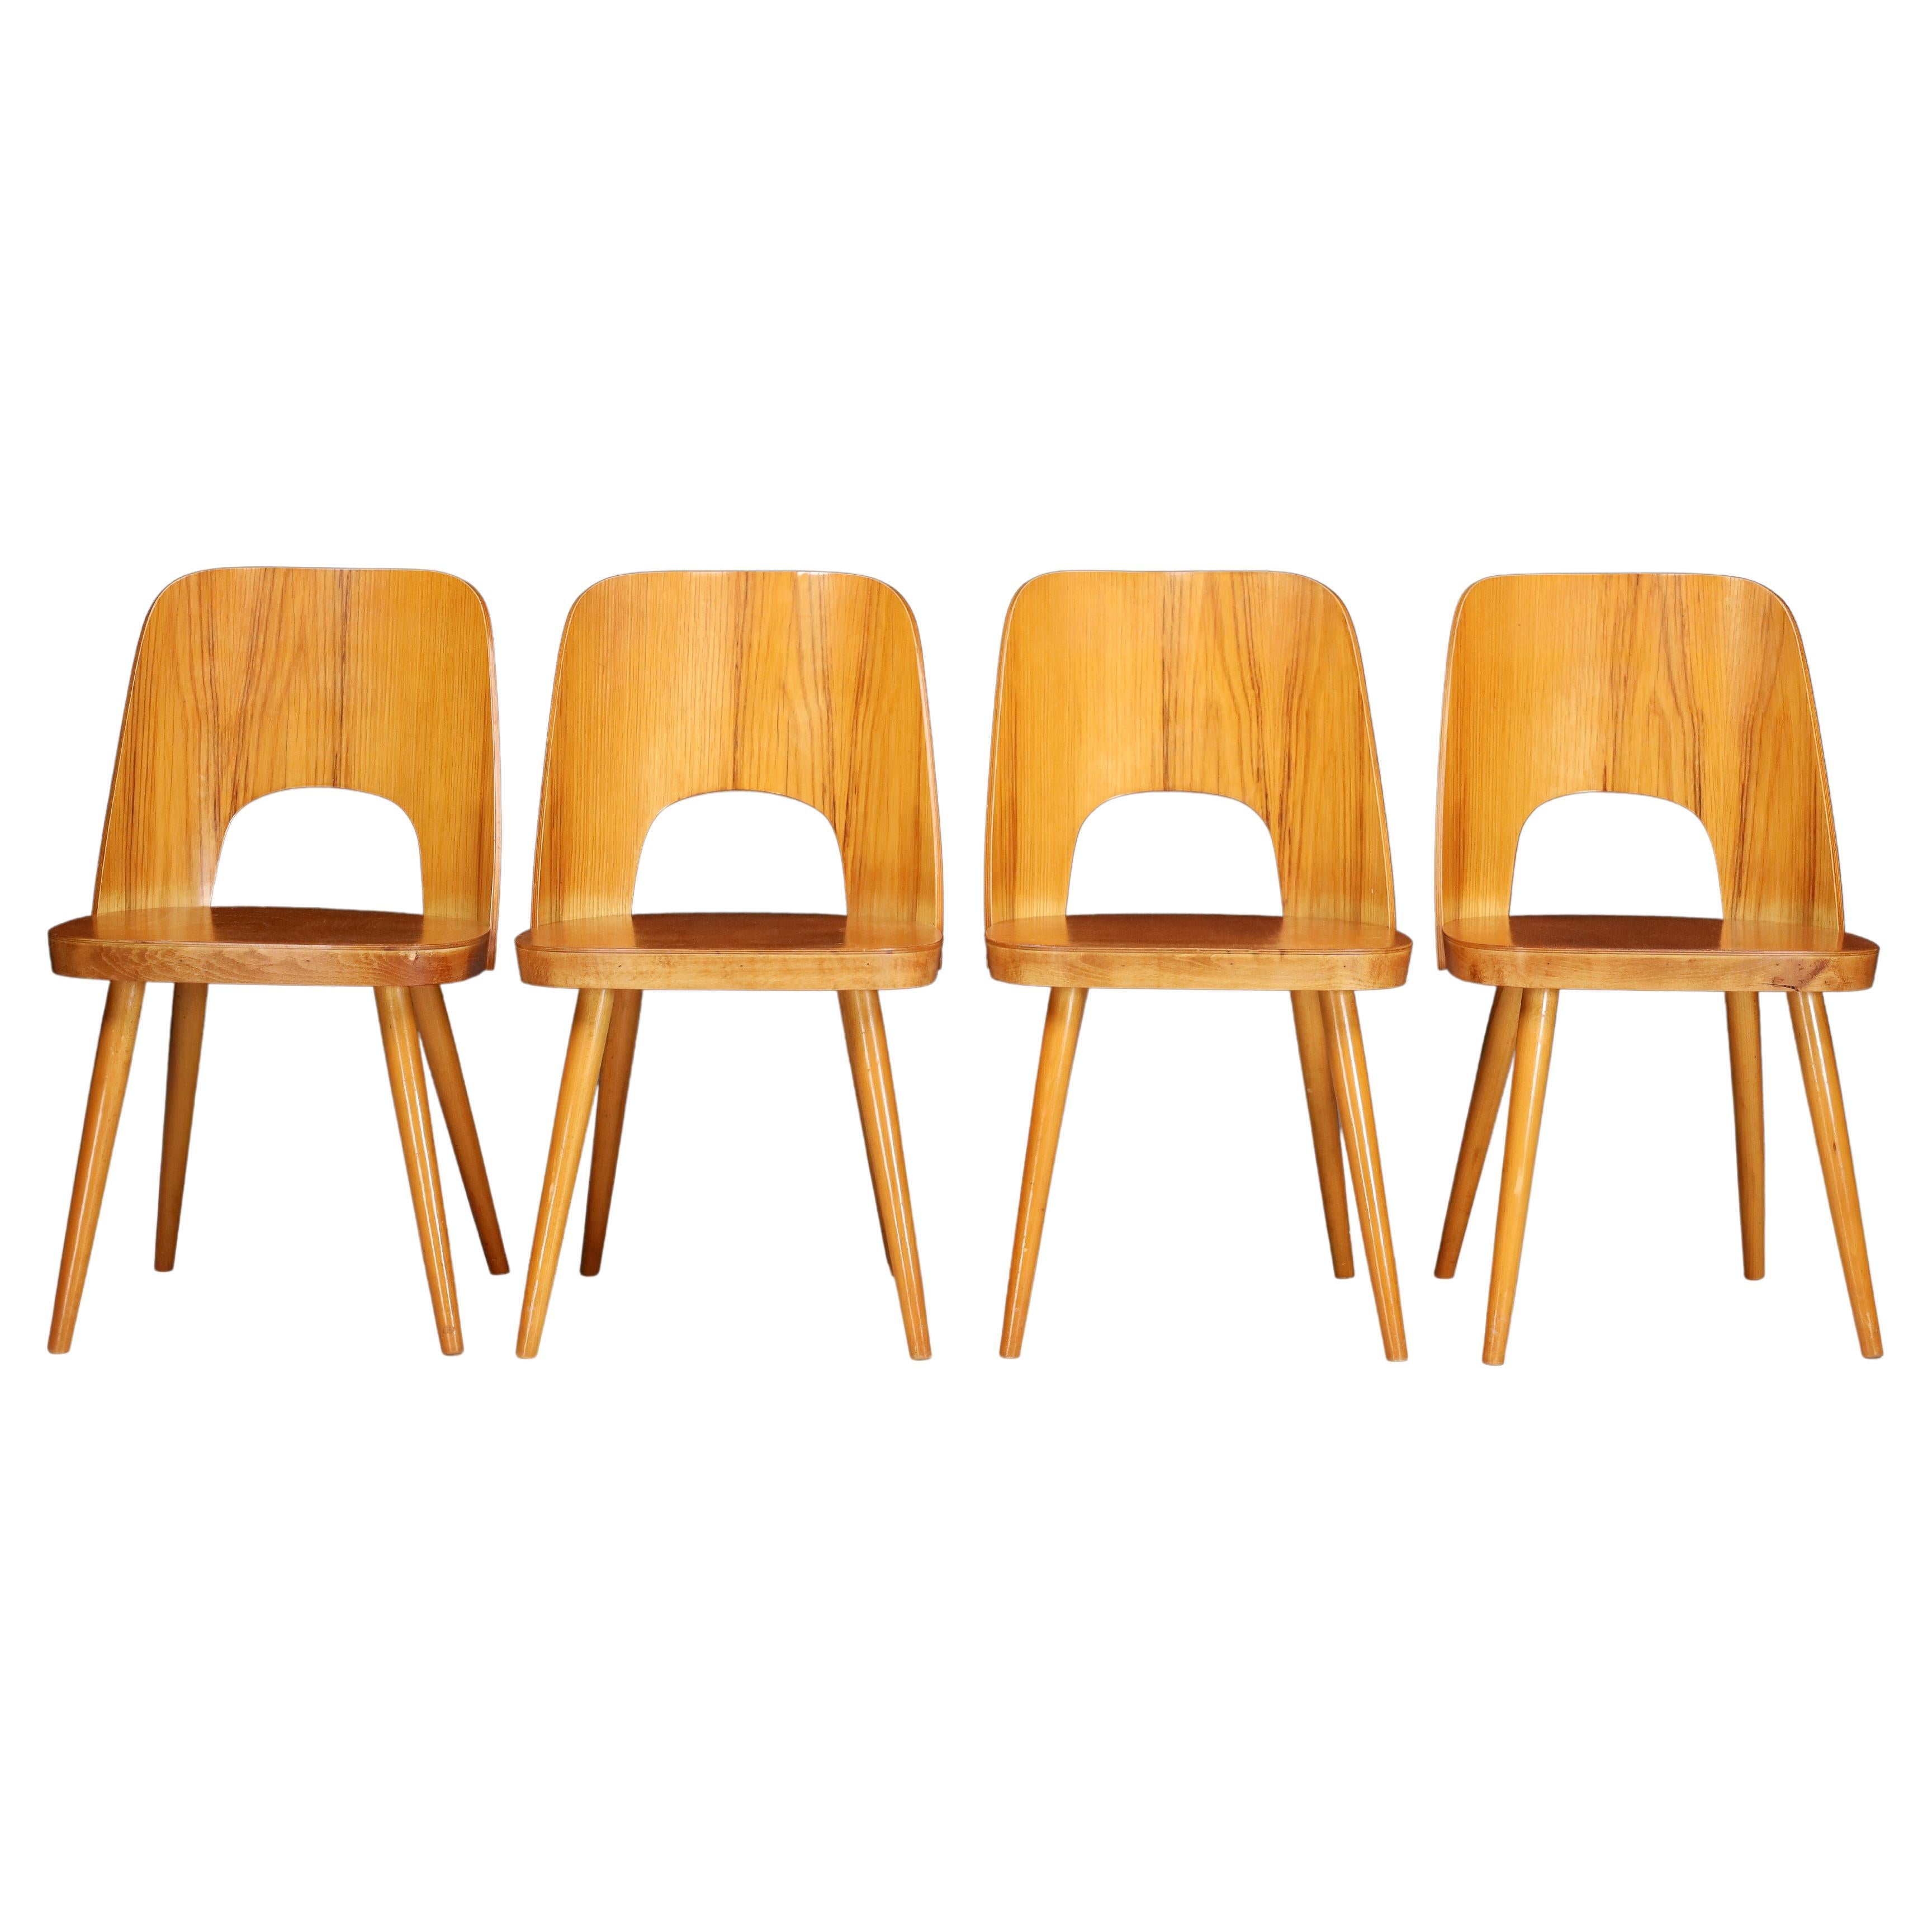 Oswald Haerdtl Set of Four Chairs, the 1950s